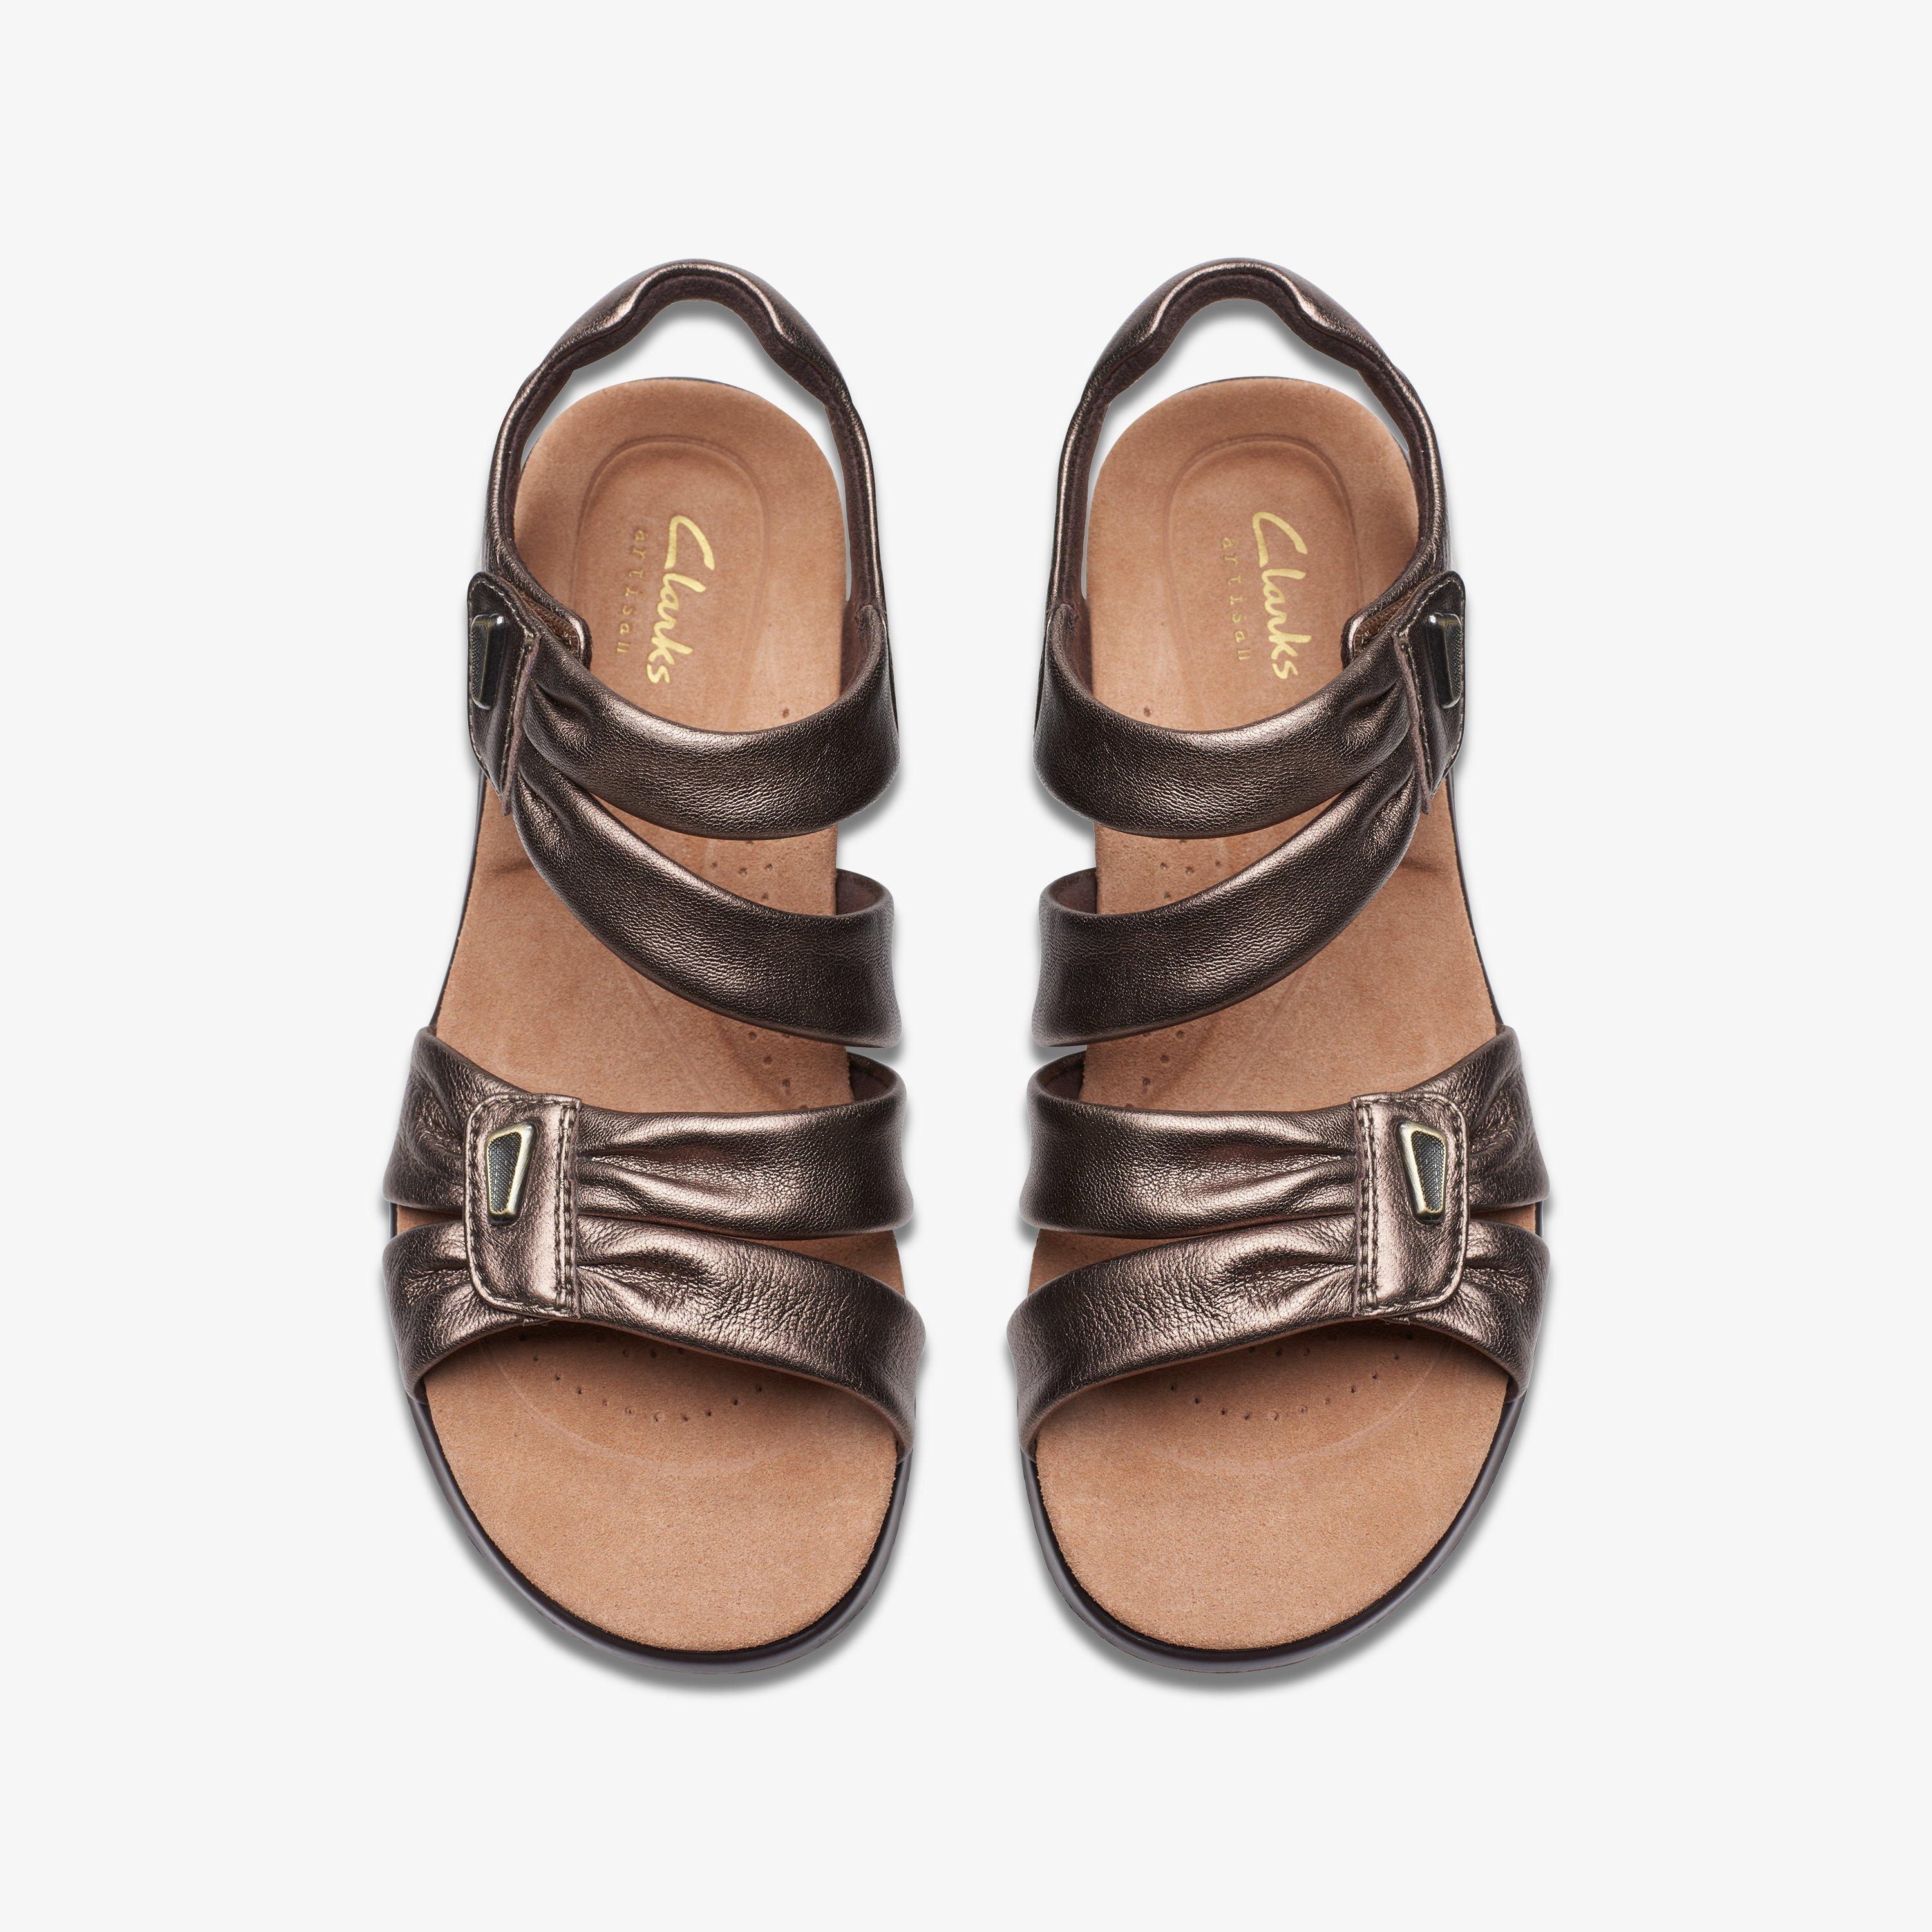 Women's Sandals: Leather Flat Sandals & Wedges